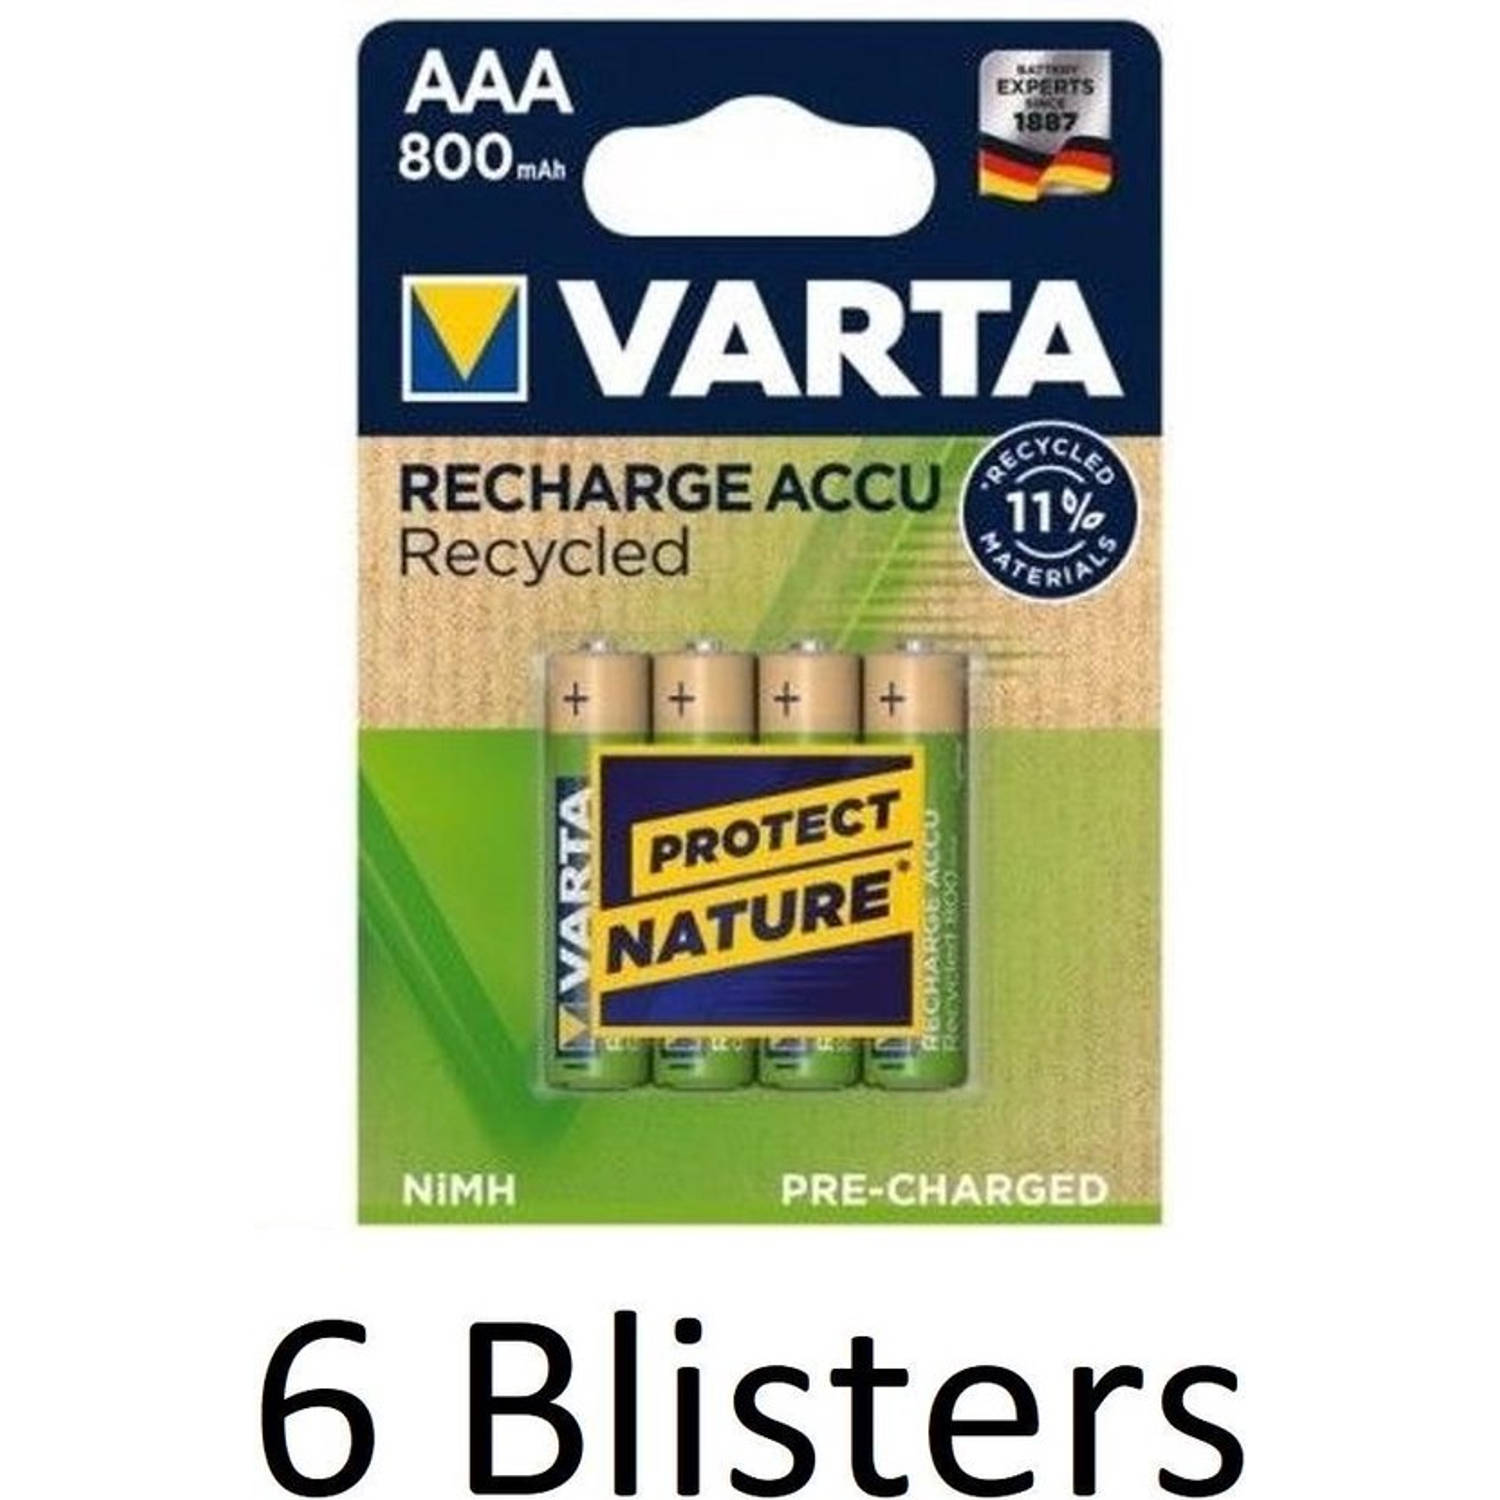 24 Stuks (6 Blisters A 4 St) Varta Recharge Accu Recycled Aaa Oplaadbare Batterijen 800 Mah